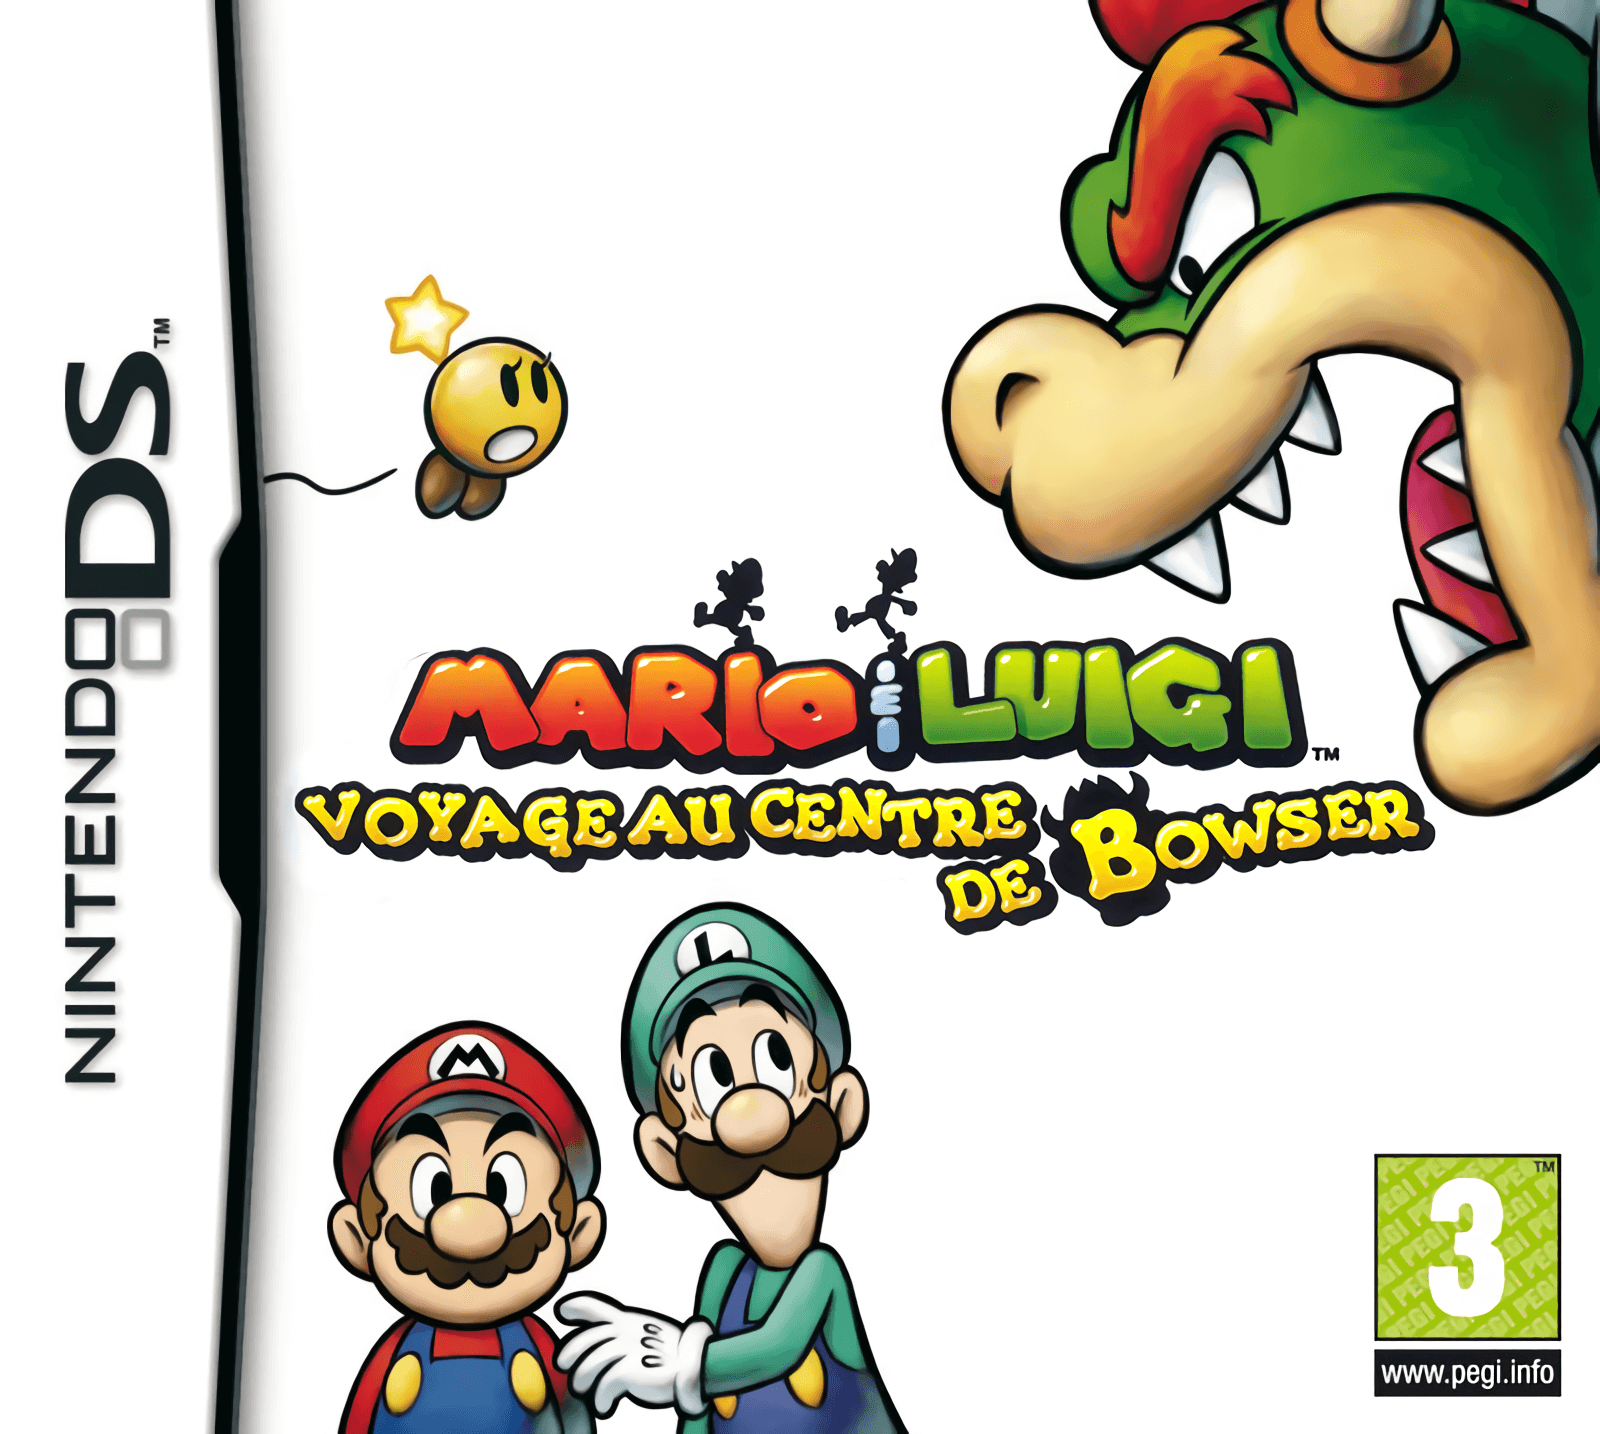 Mario luigi bowser. Mario and Luigi Bowser's inside story. Mario and Luigi Bowser's inside story DS. Nintendo DS Mario and Luigi Bowser's inside story. Марио и Луиджи Боузер инсайд стори.